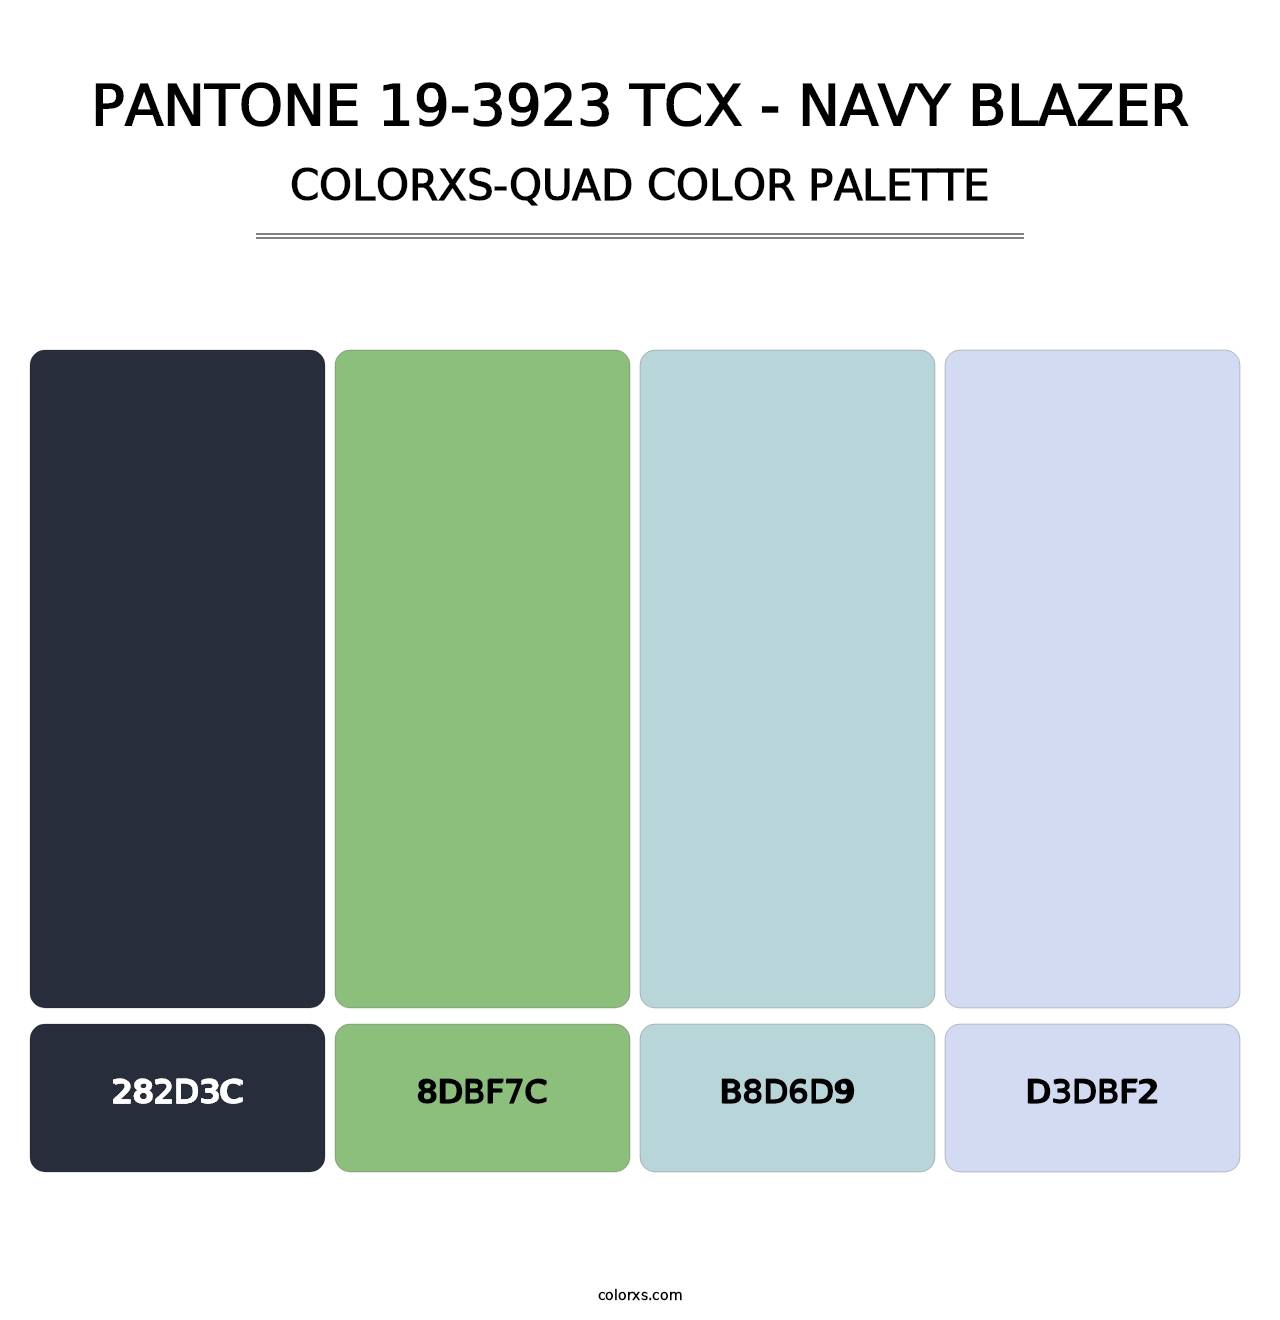 PANTONE 19-3923 TCX - Navy Blazer - Colorxs Quad Palette